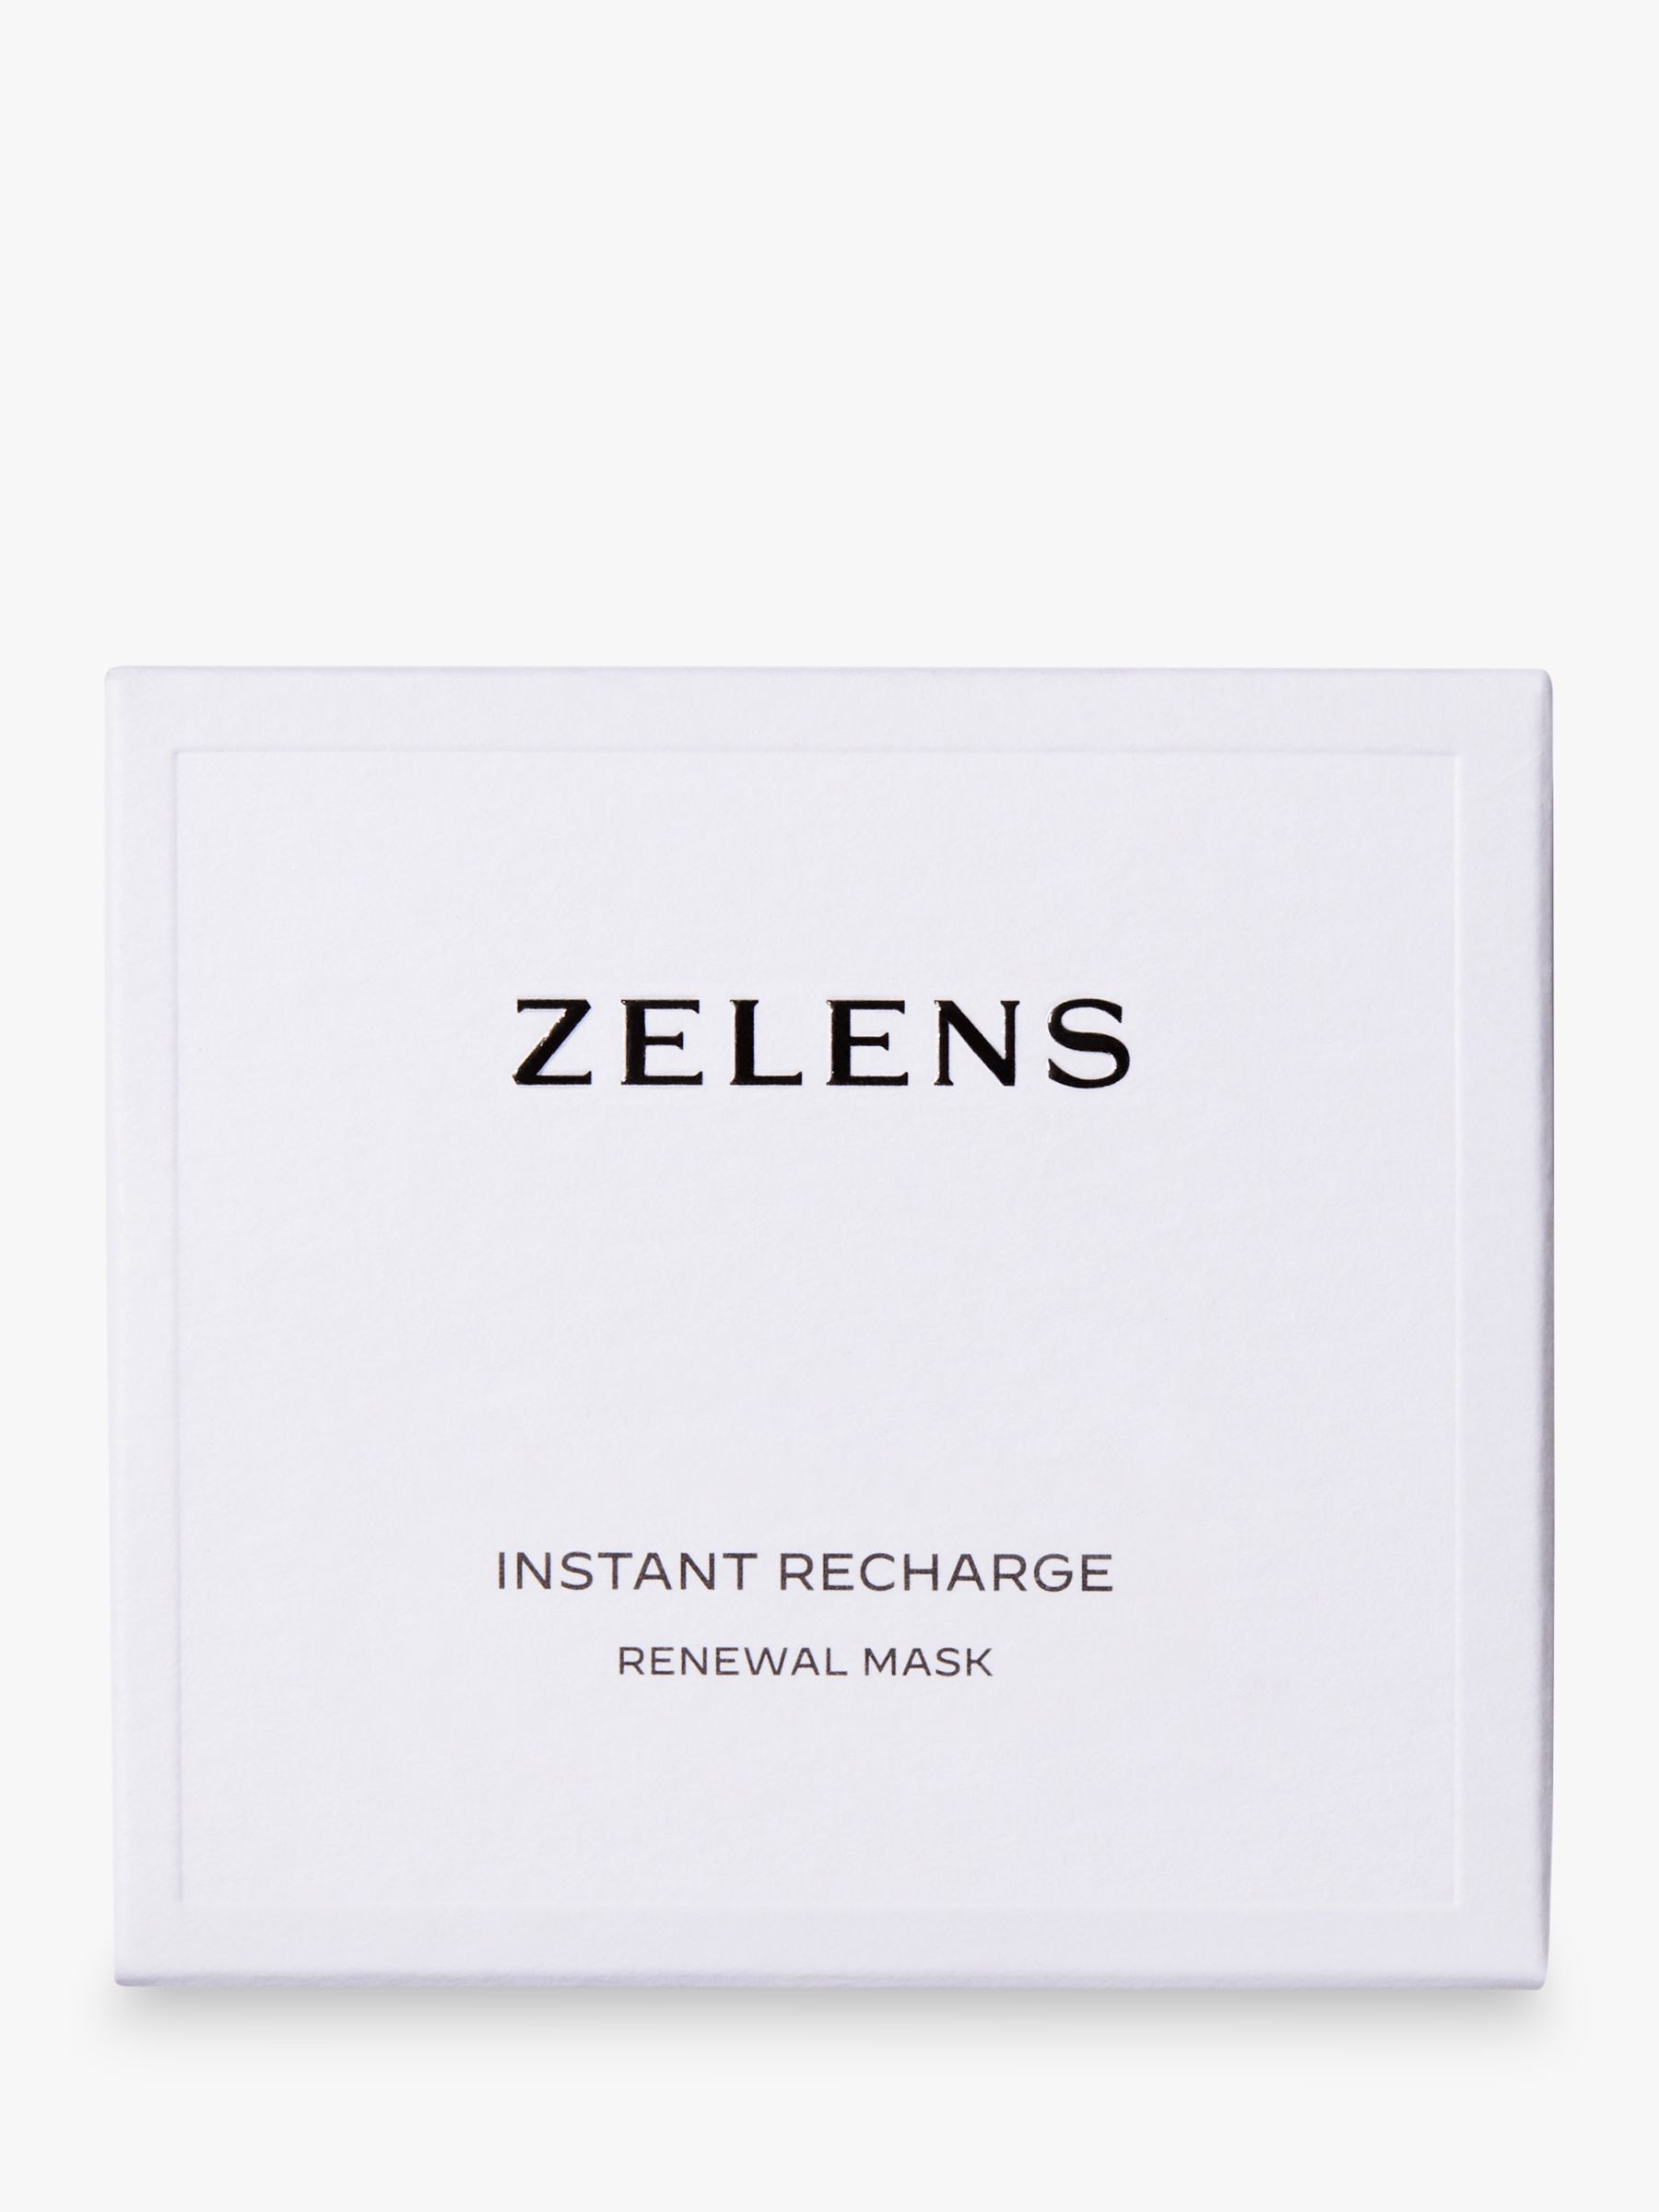 Zelens Instant Recharge Renewal Mask, 50ml 2